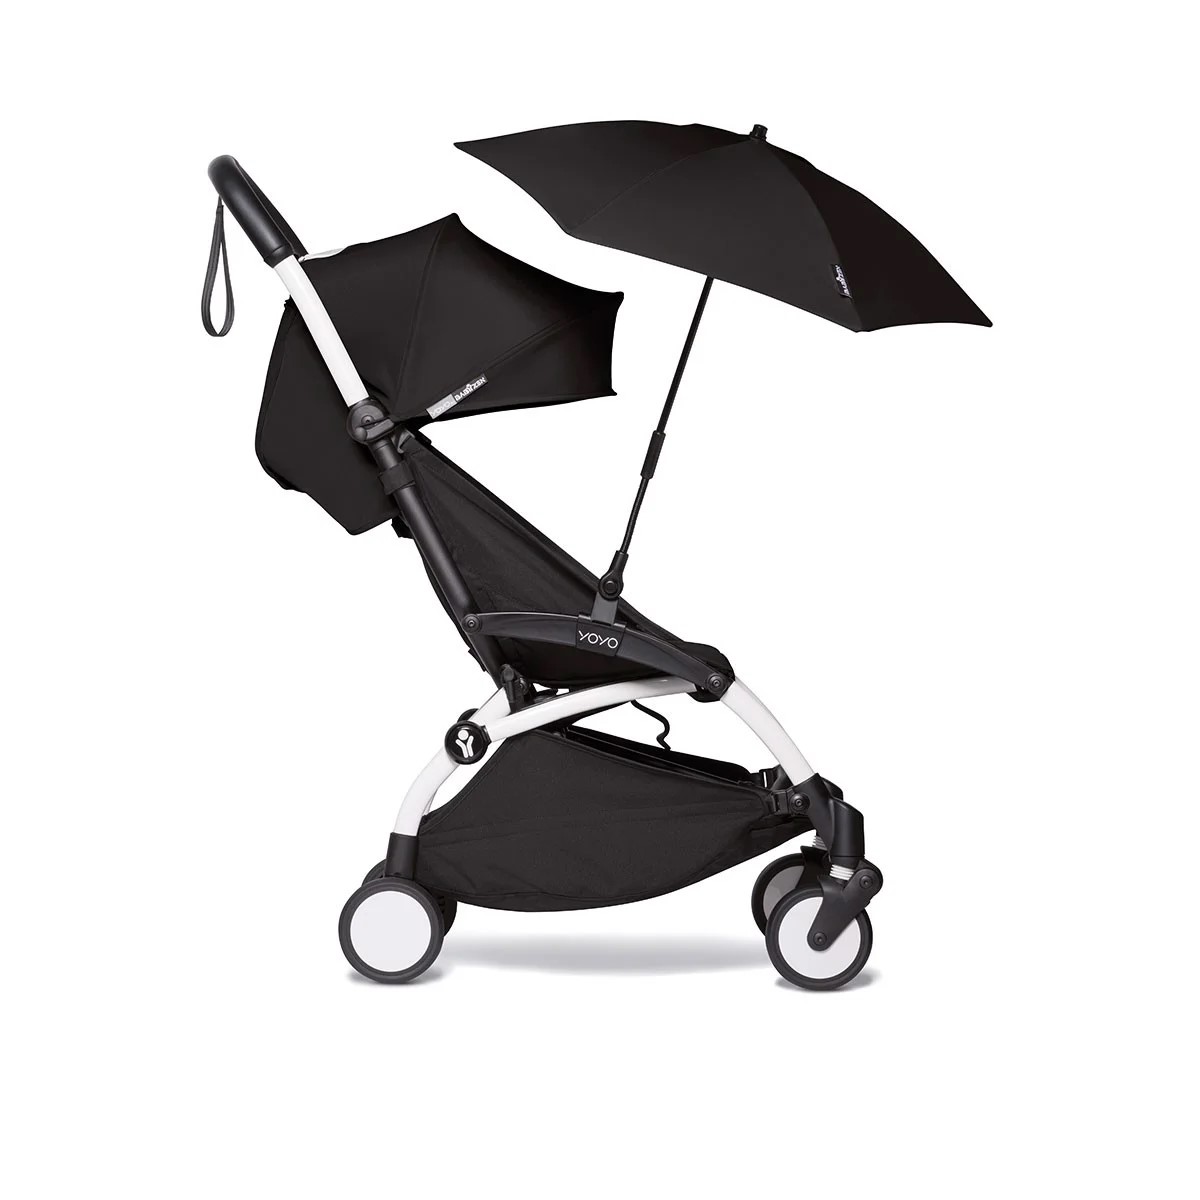 Xe đẩy Babyzen Yoyo 0+/6+ Complete Stroller - Black/Black xe day babyzen yoyo 0 6 complete stroller black black chiaki vn 5 jpg 1664788060 03102022160740